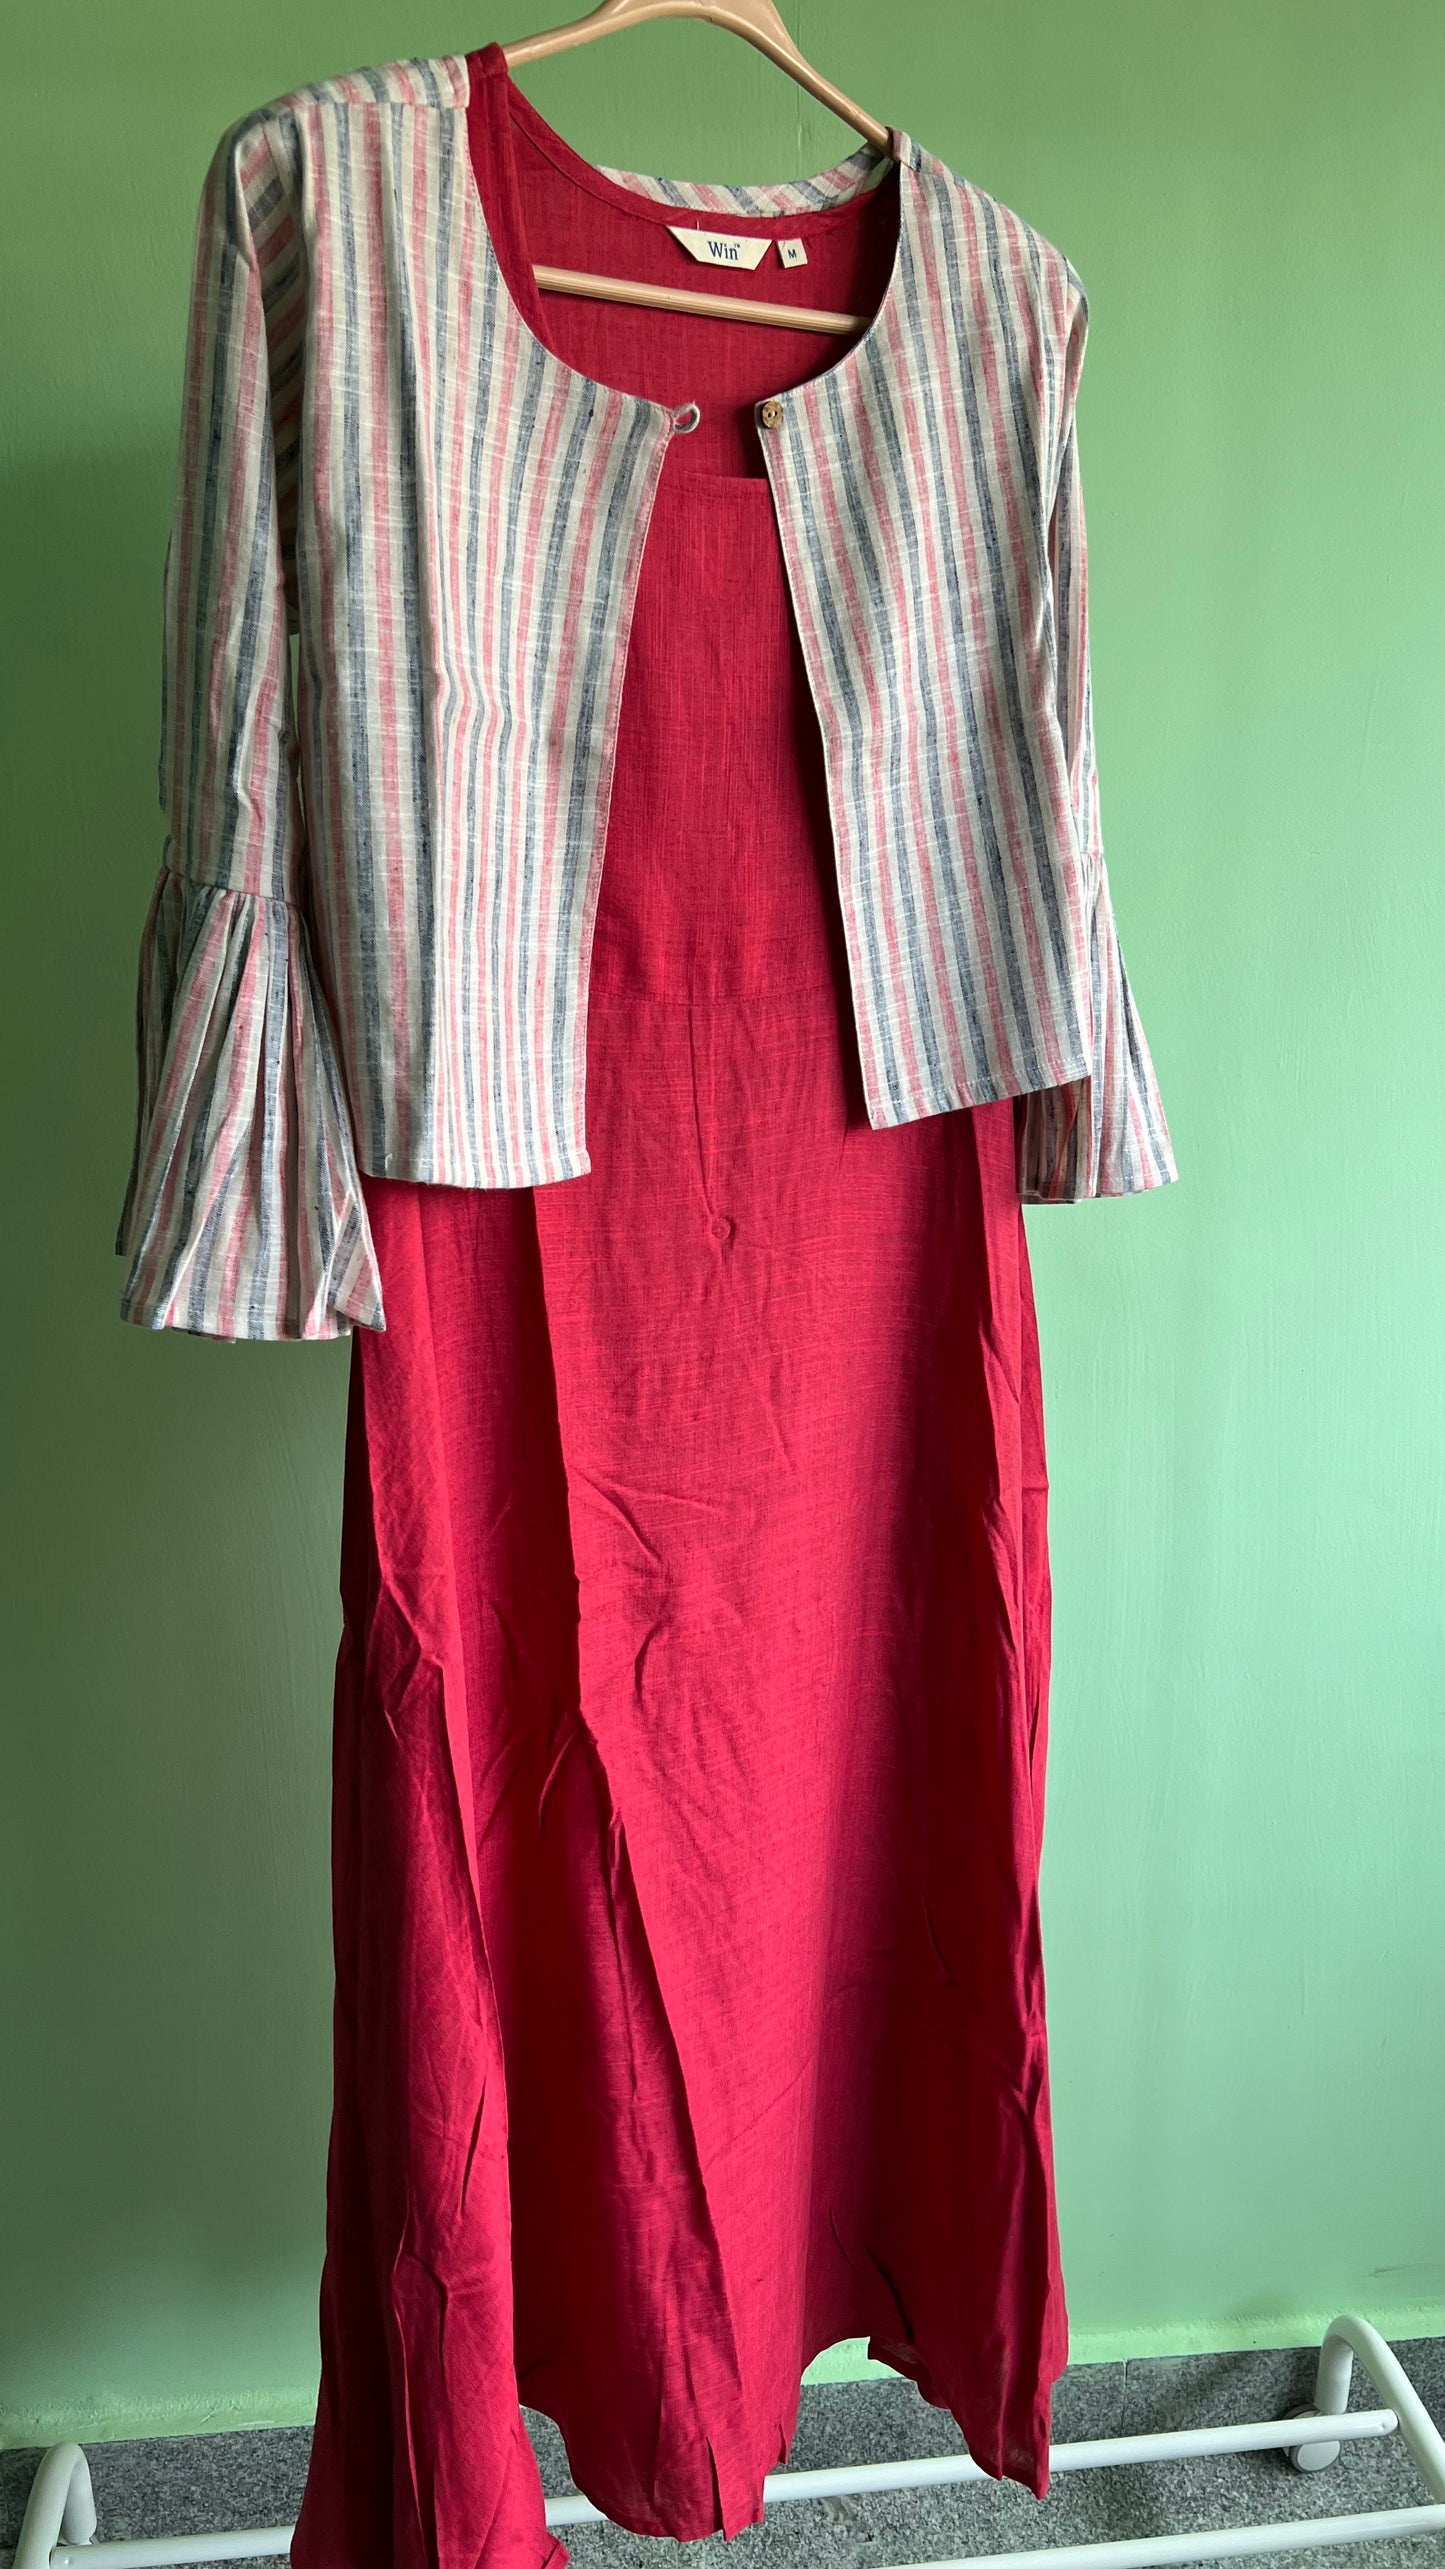 Ishana - Pink Half jacket dress